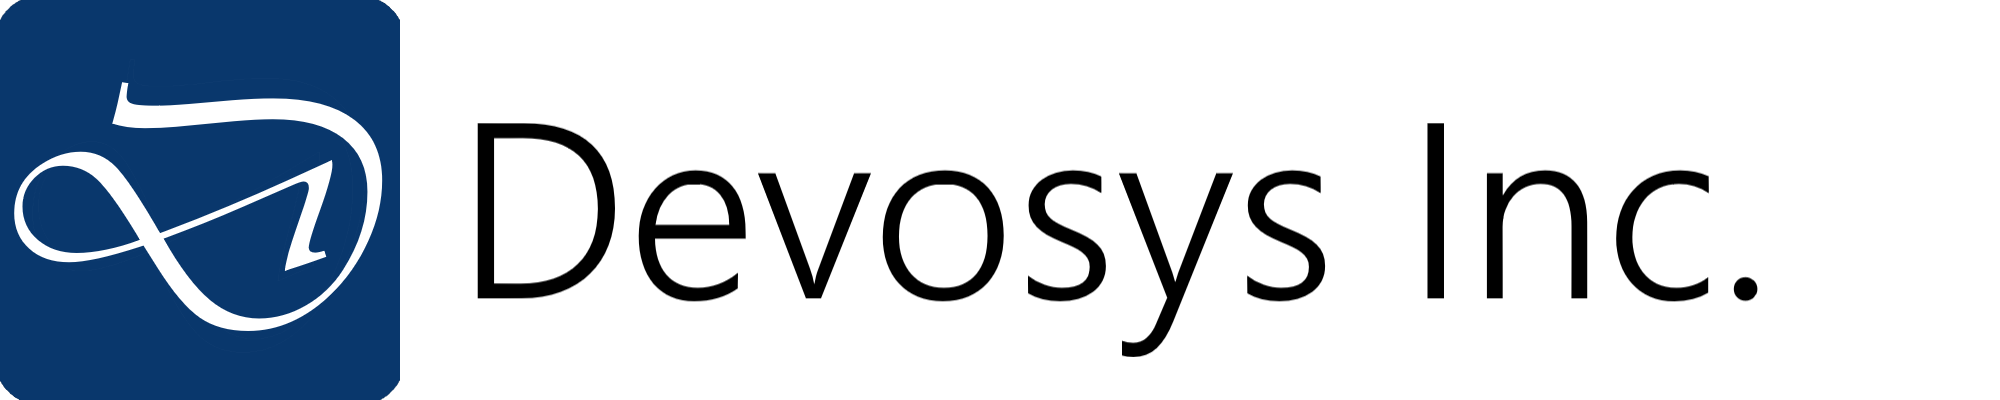 Dévosys Inc.